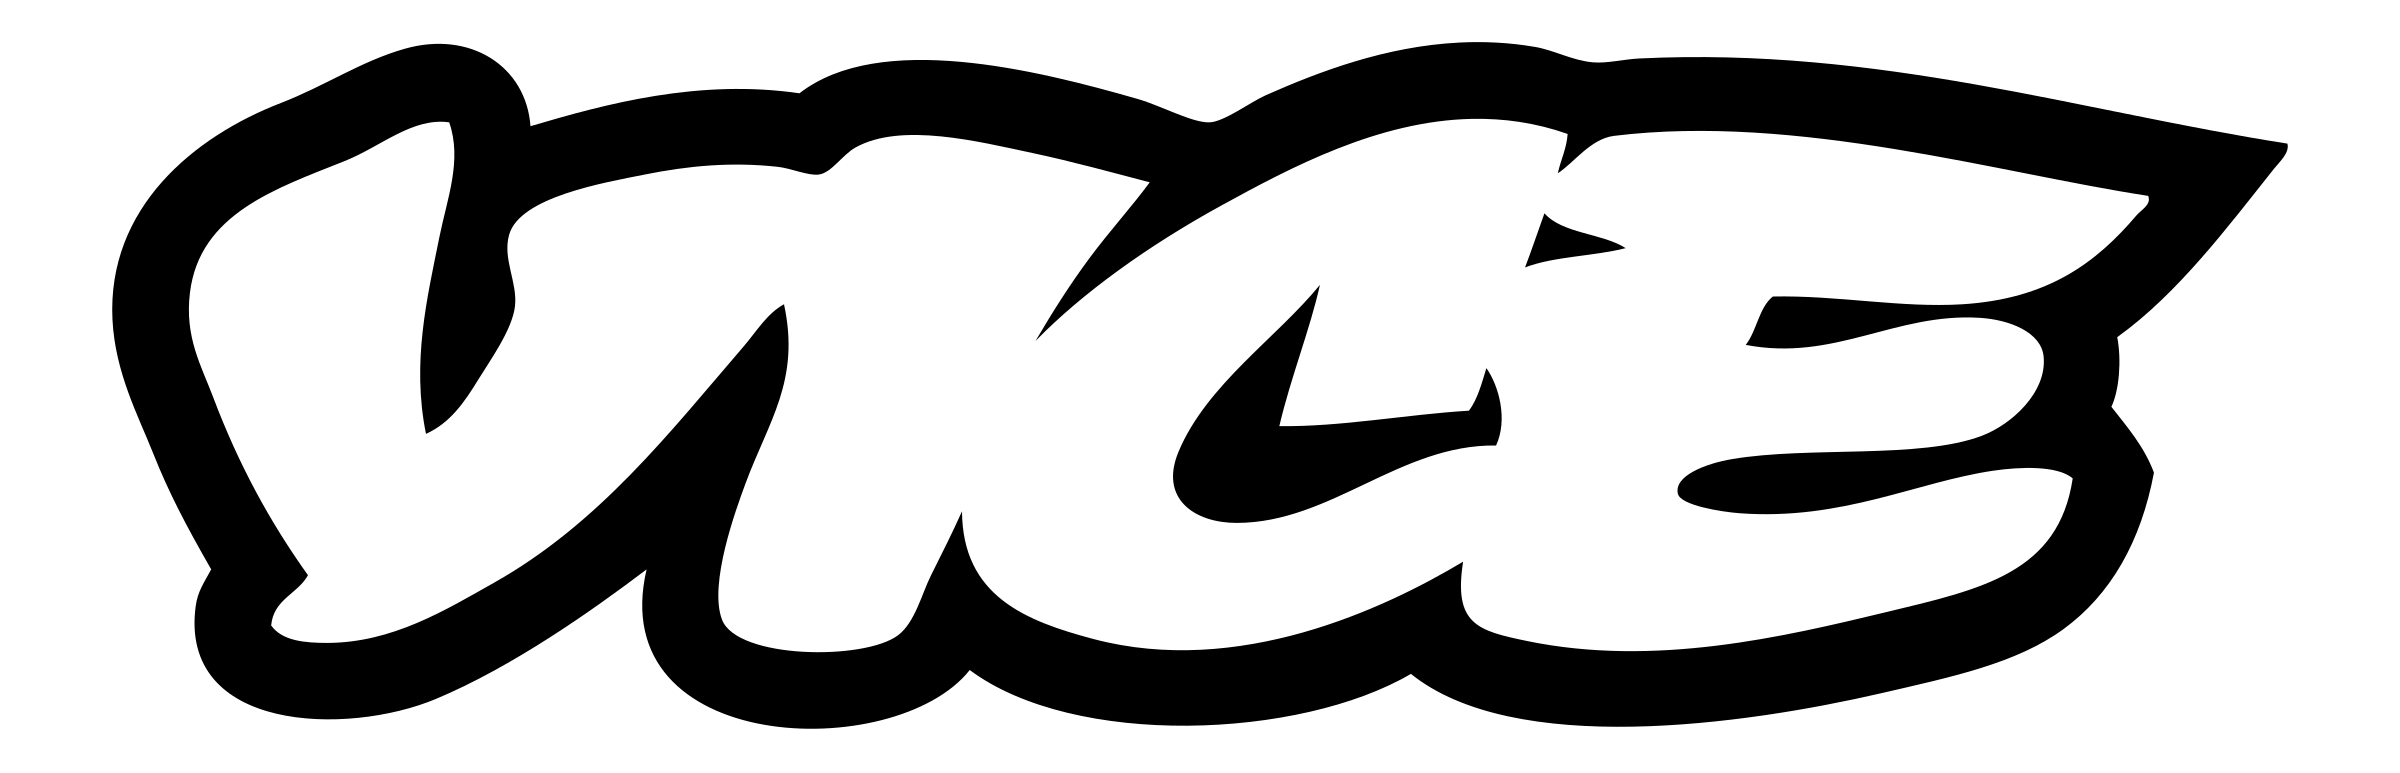 Vice Logo - Vice Logo PNG Transparent & SVG Vector - Freebie Supply